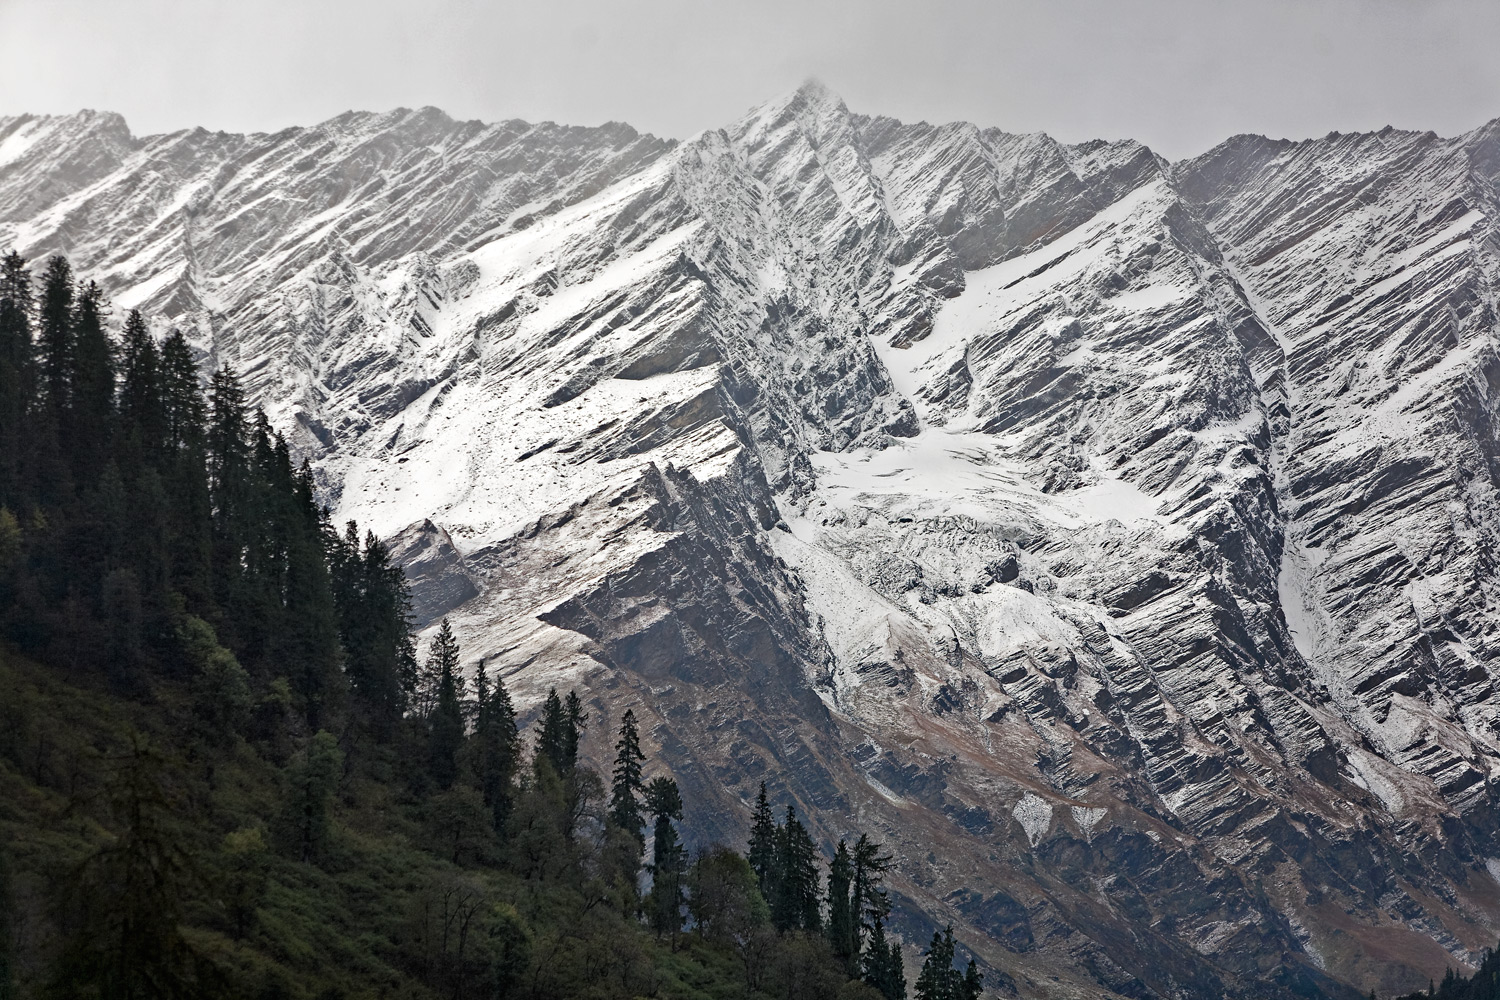 Mountain-scape near Solang, Himachal Pradesh, India